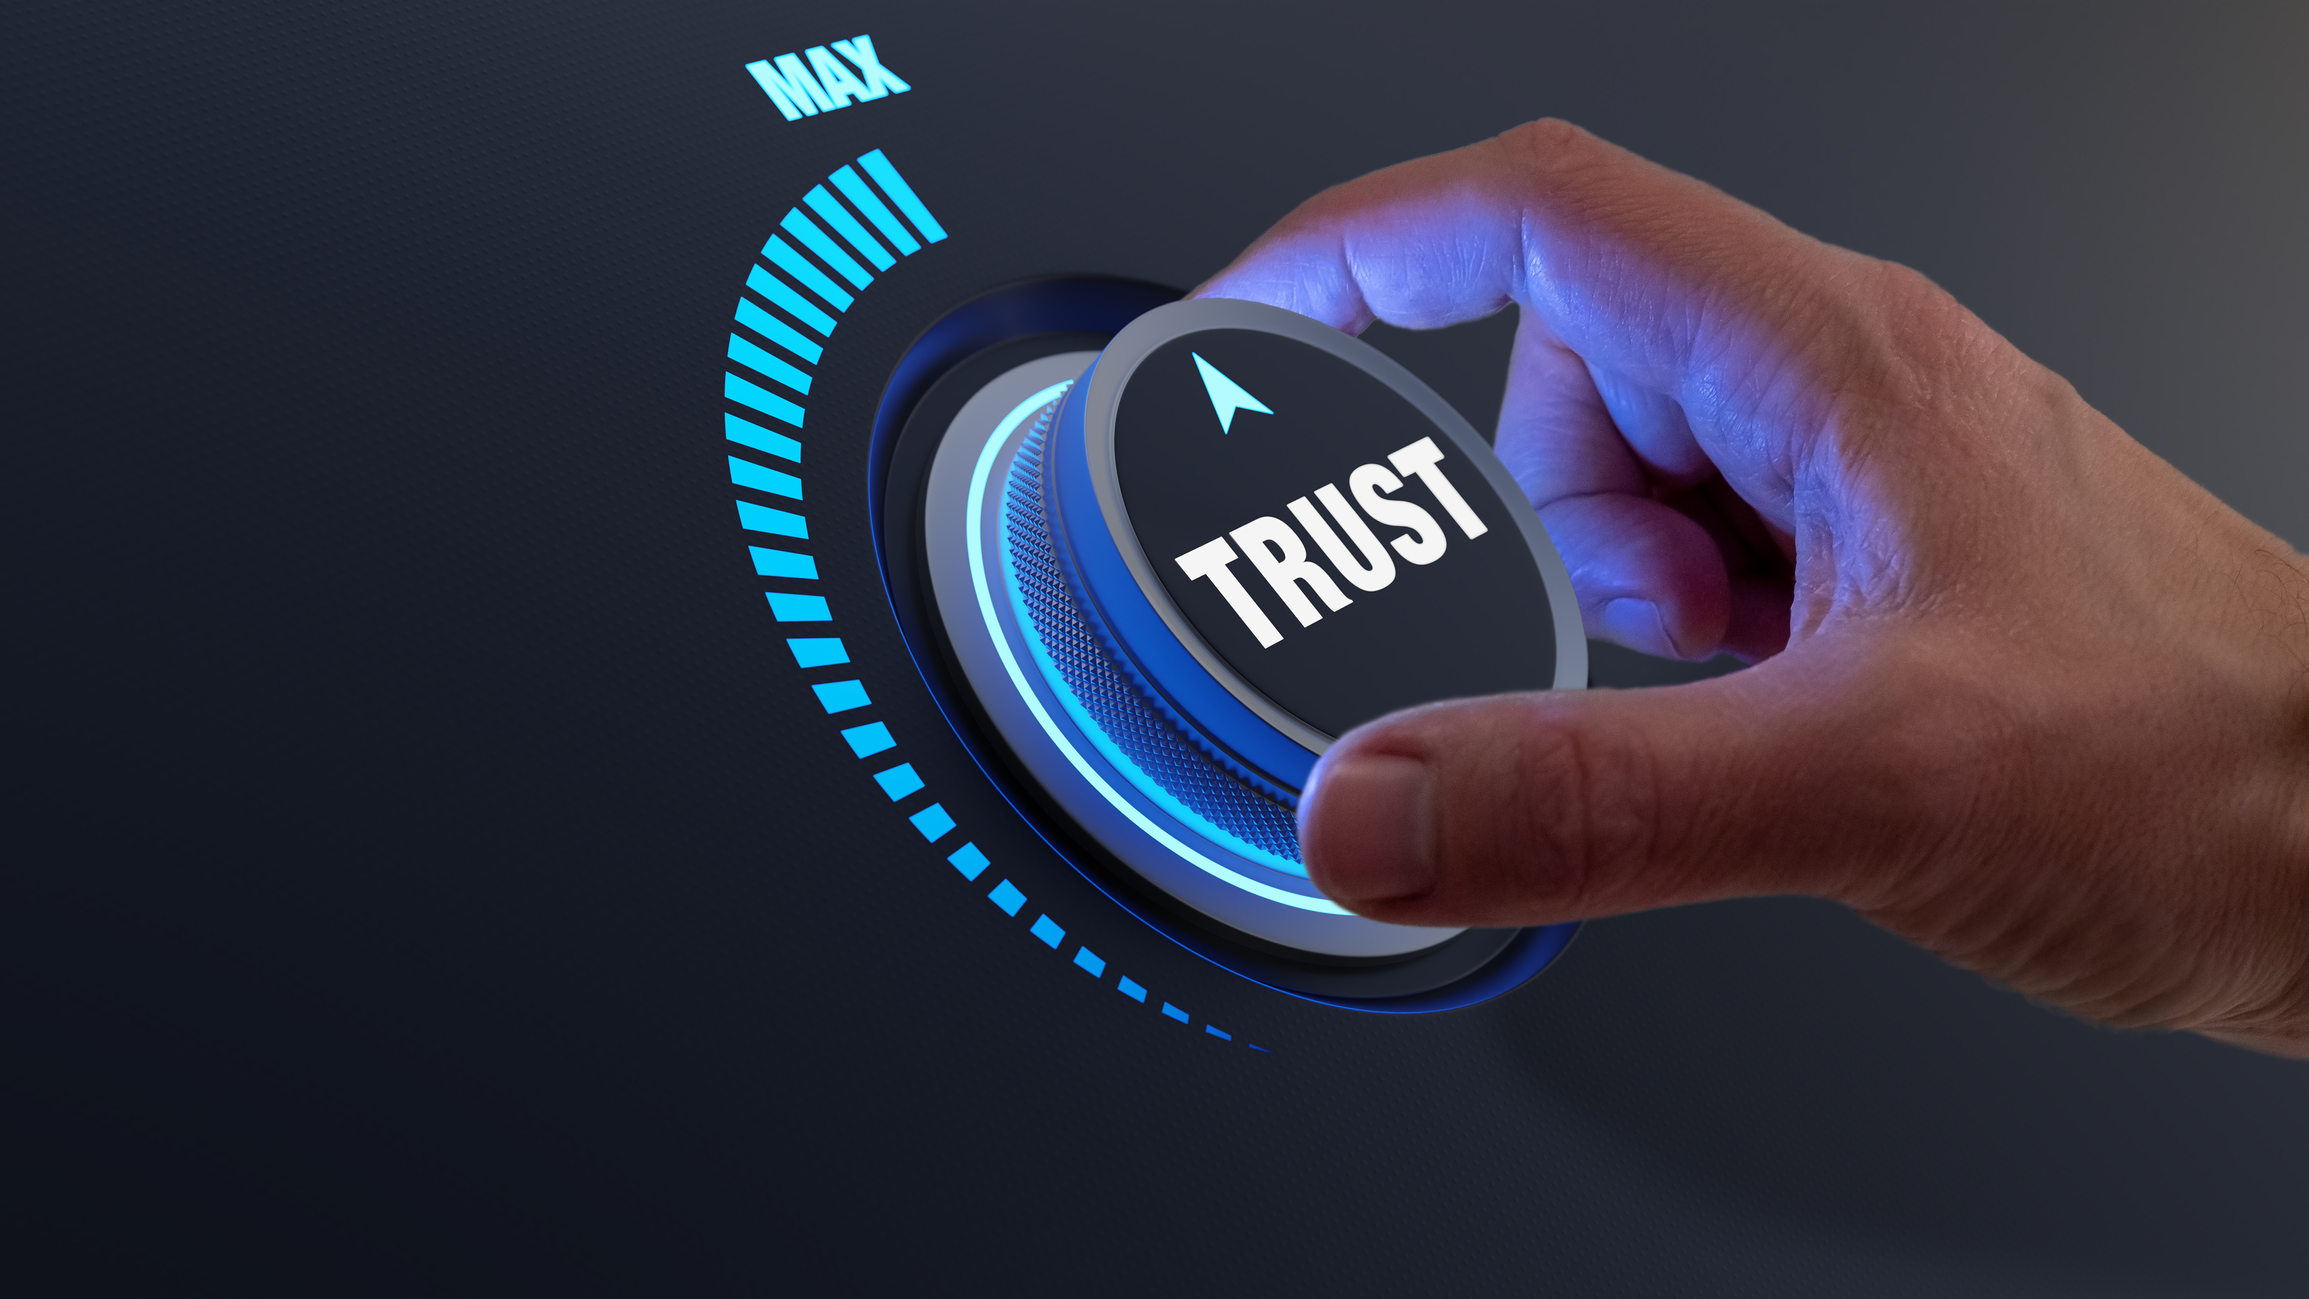 Building Digital Trust in an Untrusting World